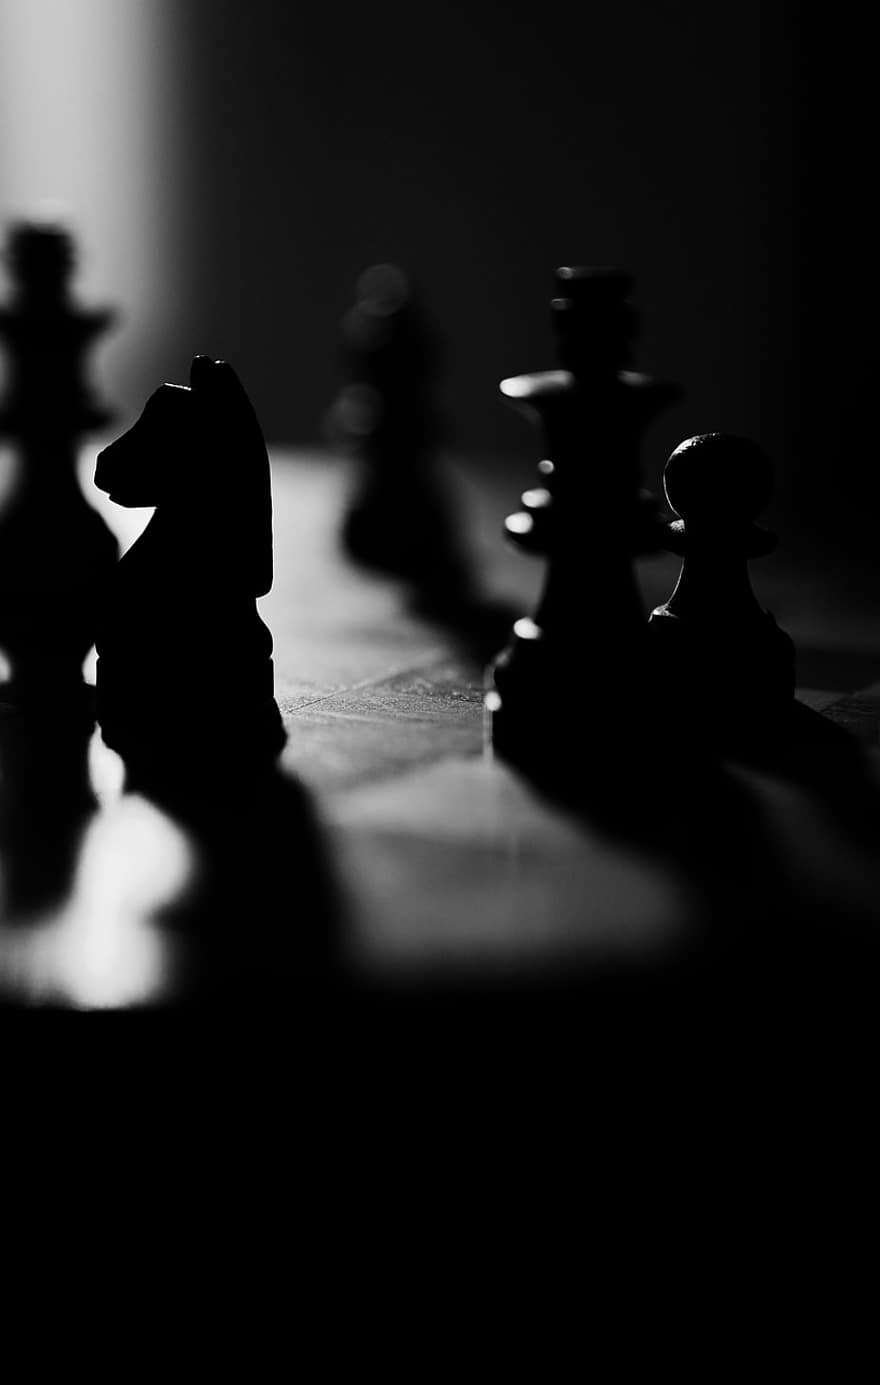 şah, monocrom, joc, strategie